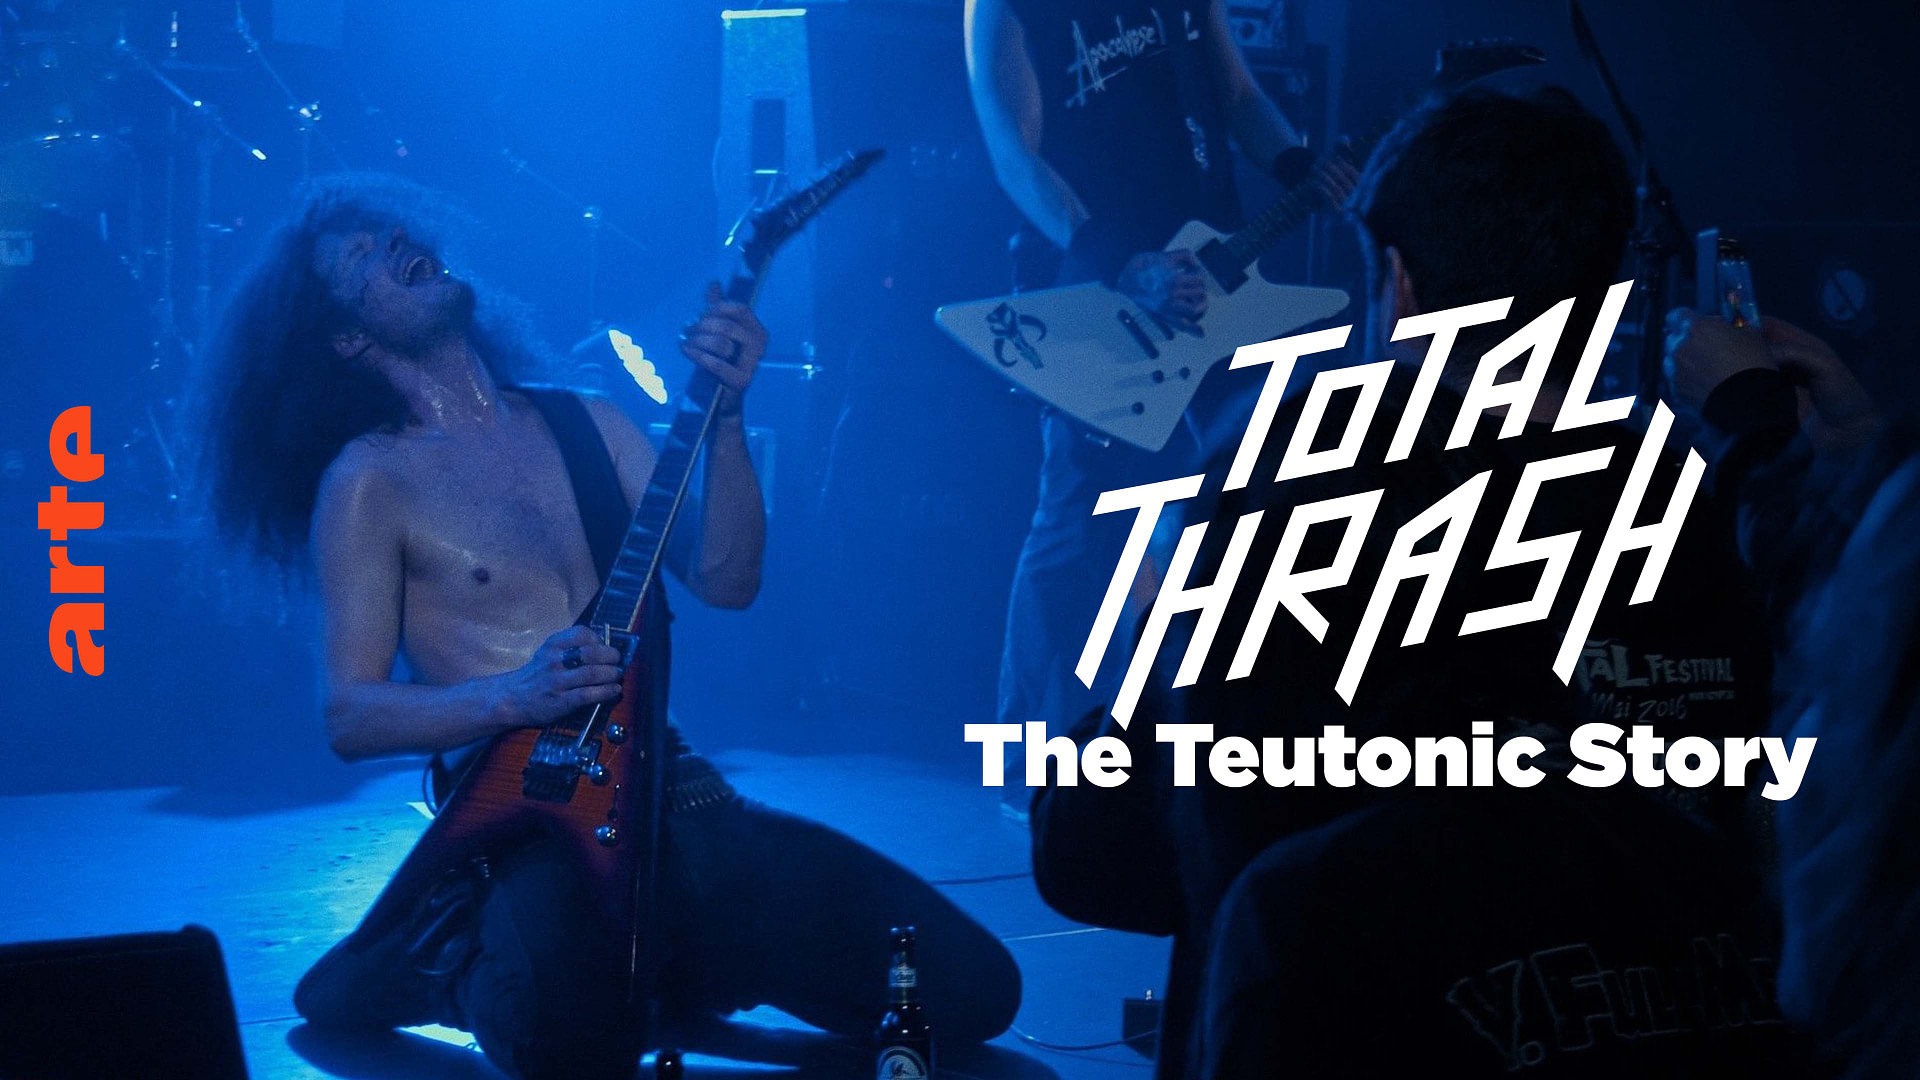 TOTAL THRASH - The Teutonic Story